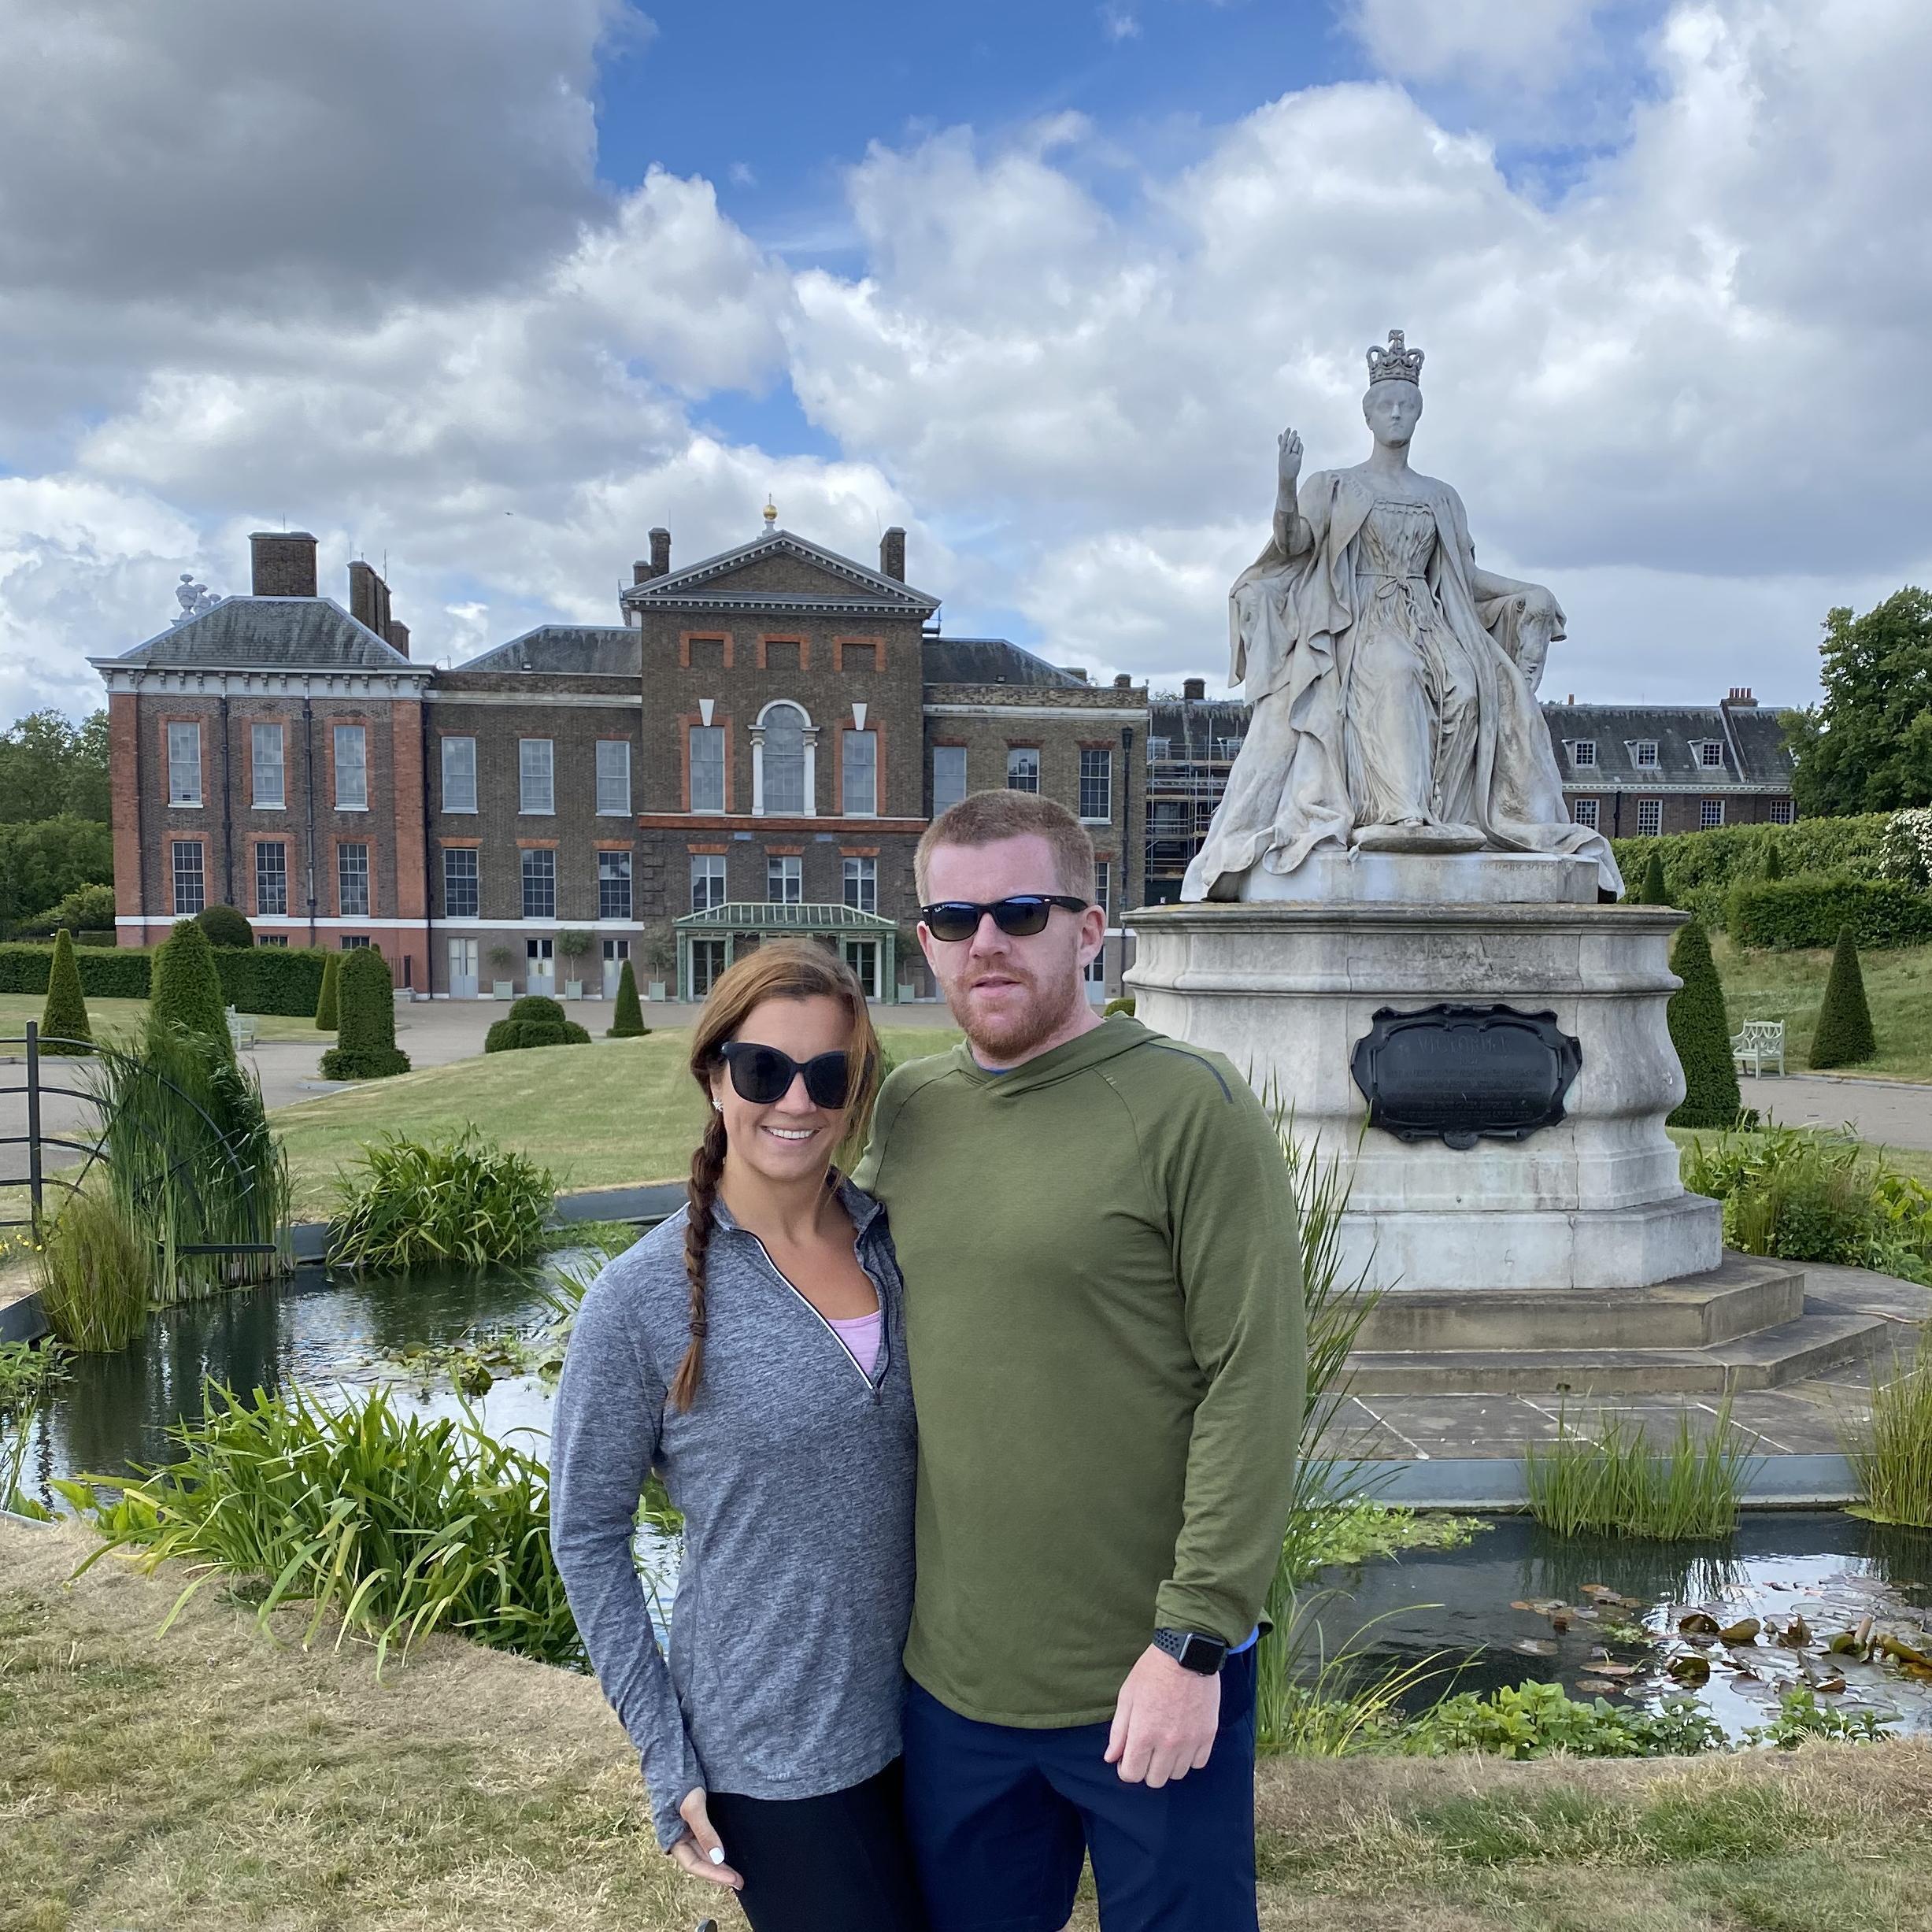 At Kensington Palace, Exploring London during Lockdown